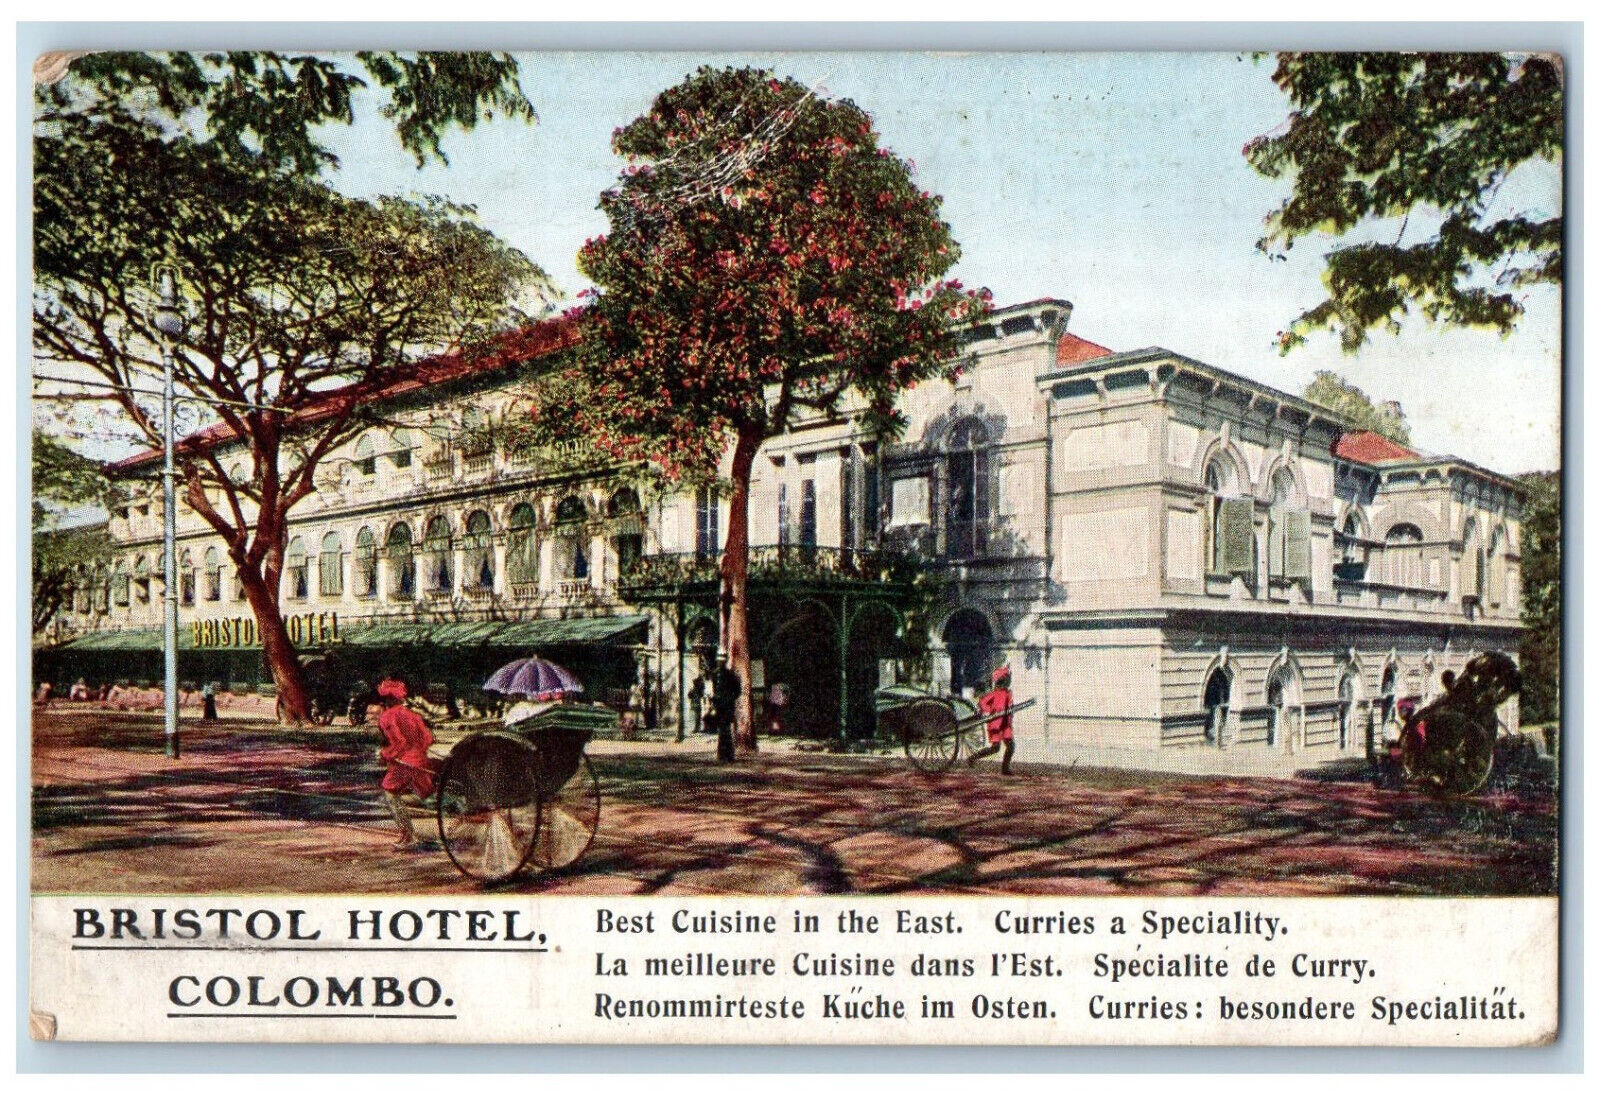 Colombo Sri Lanka Ceylon Postcard Bristol Hotel Best Cuisine in the East c1910